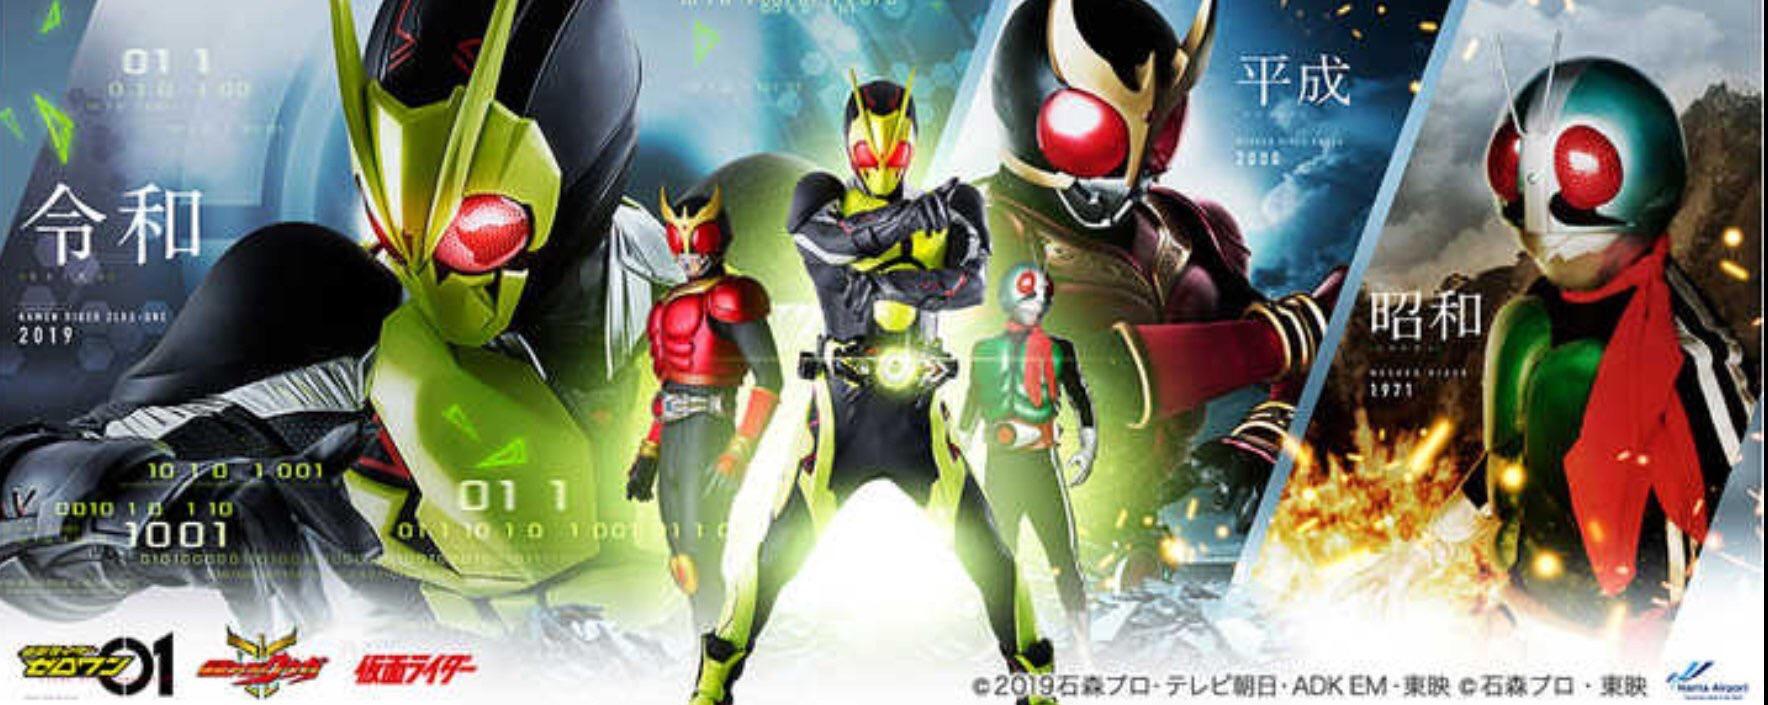 Promotional Poster For Kamen Rider Zero One At Narita Airport